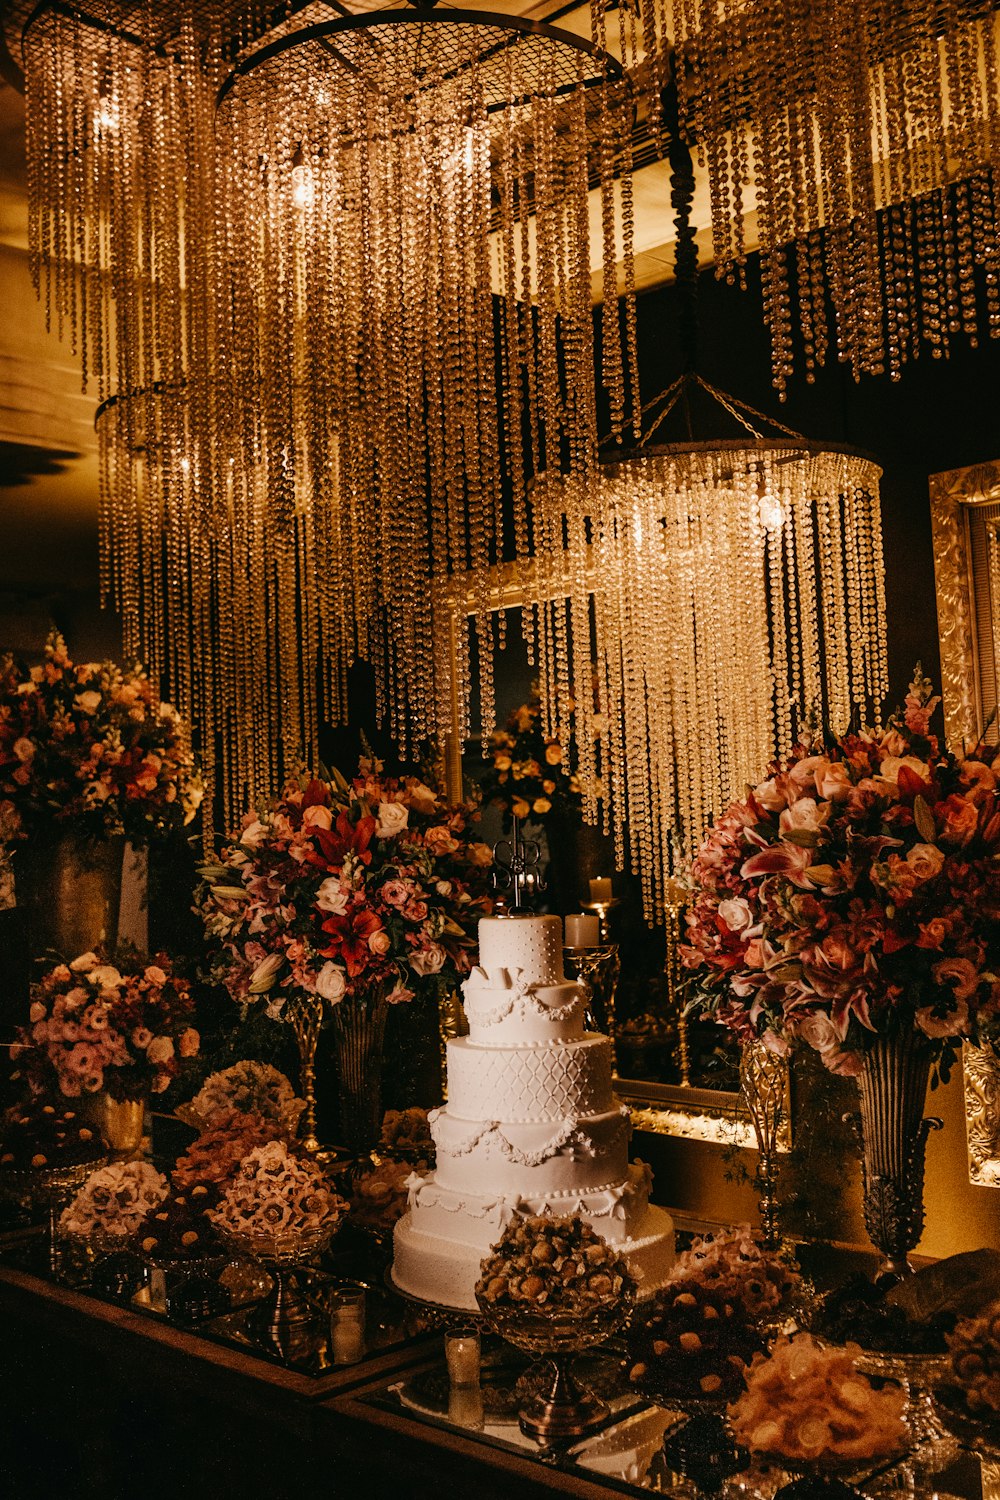 500+ Wedding Decoration Pictures [HQ] | Download Free Images on Unsplash